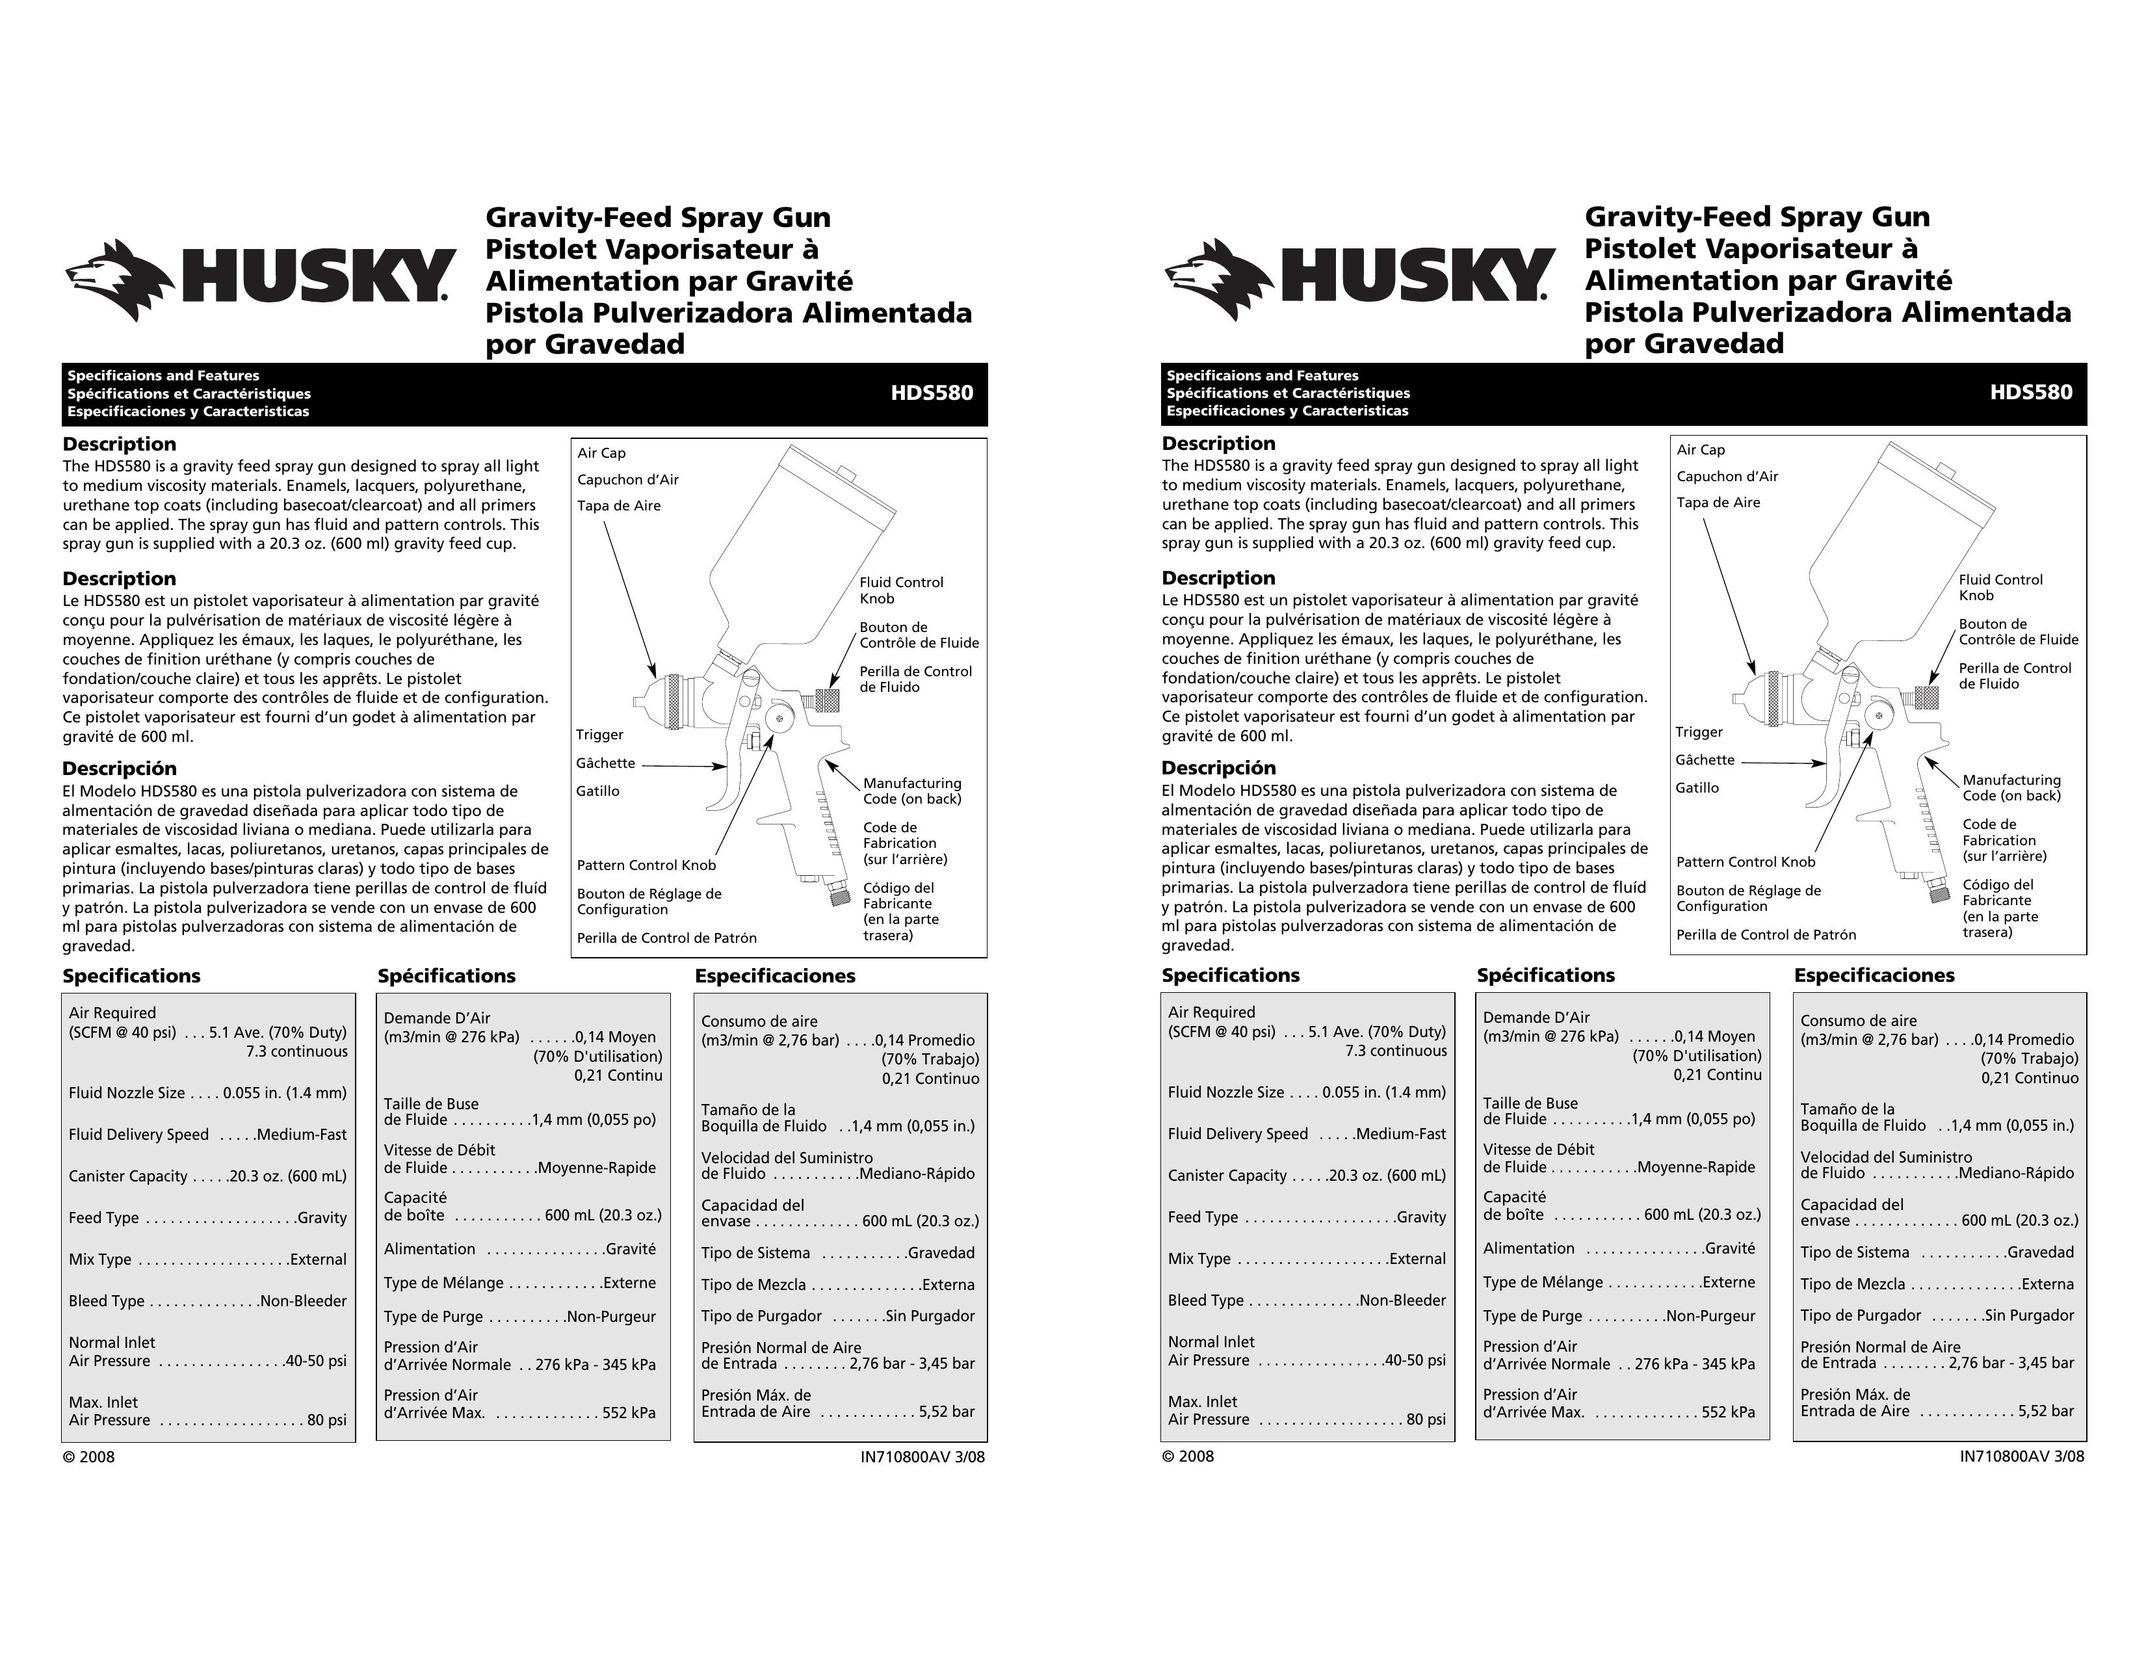 Husky HDS580 Paint Sprayer User Manual